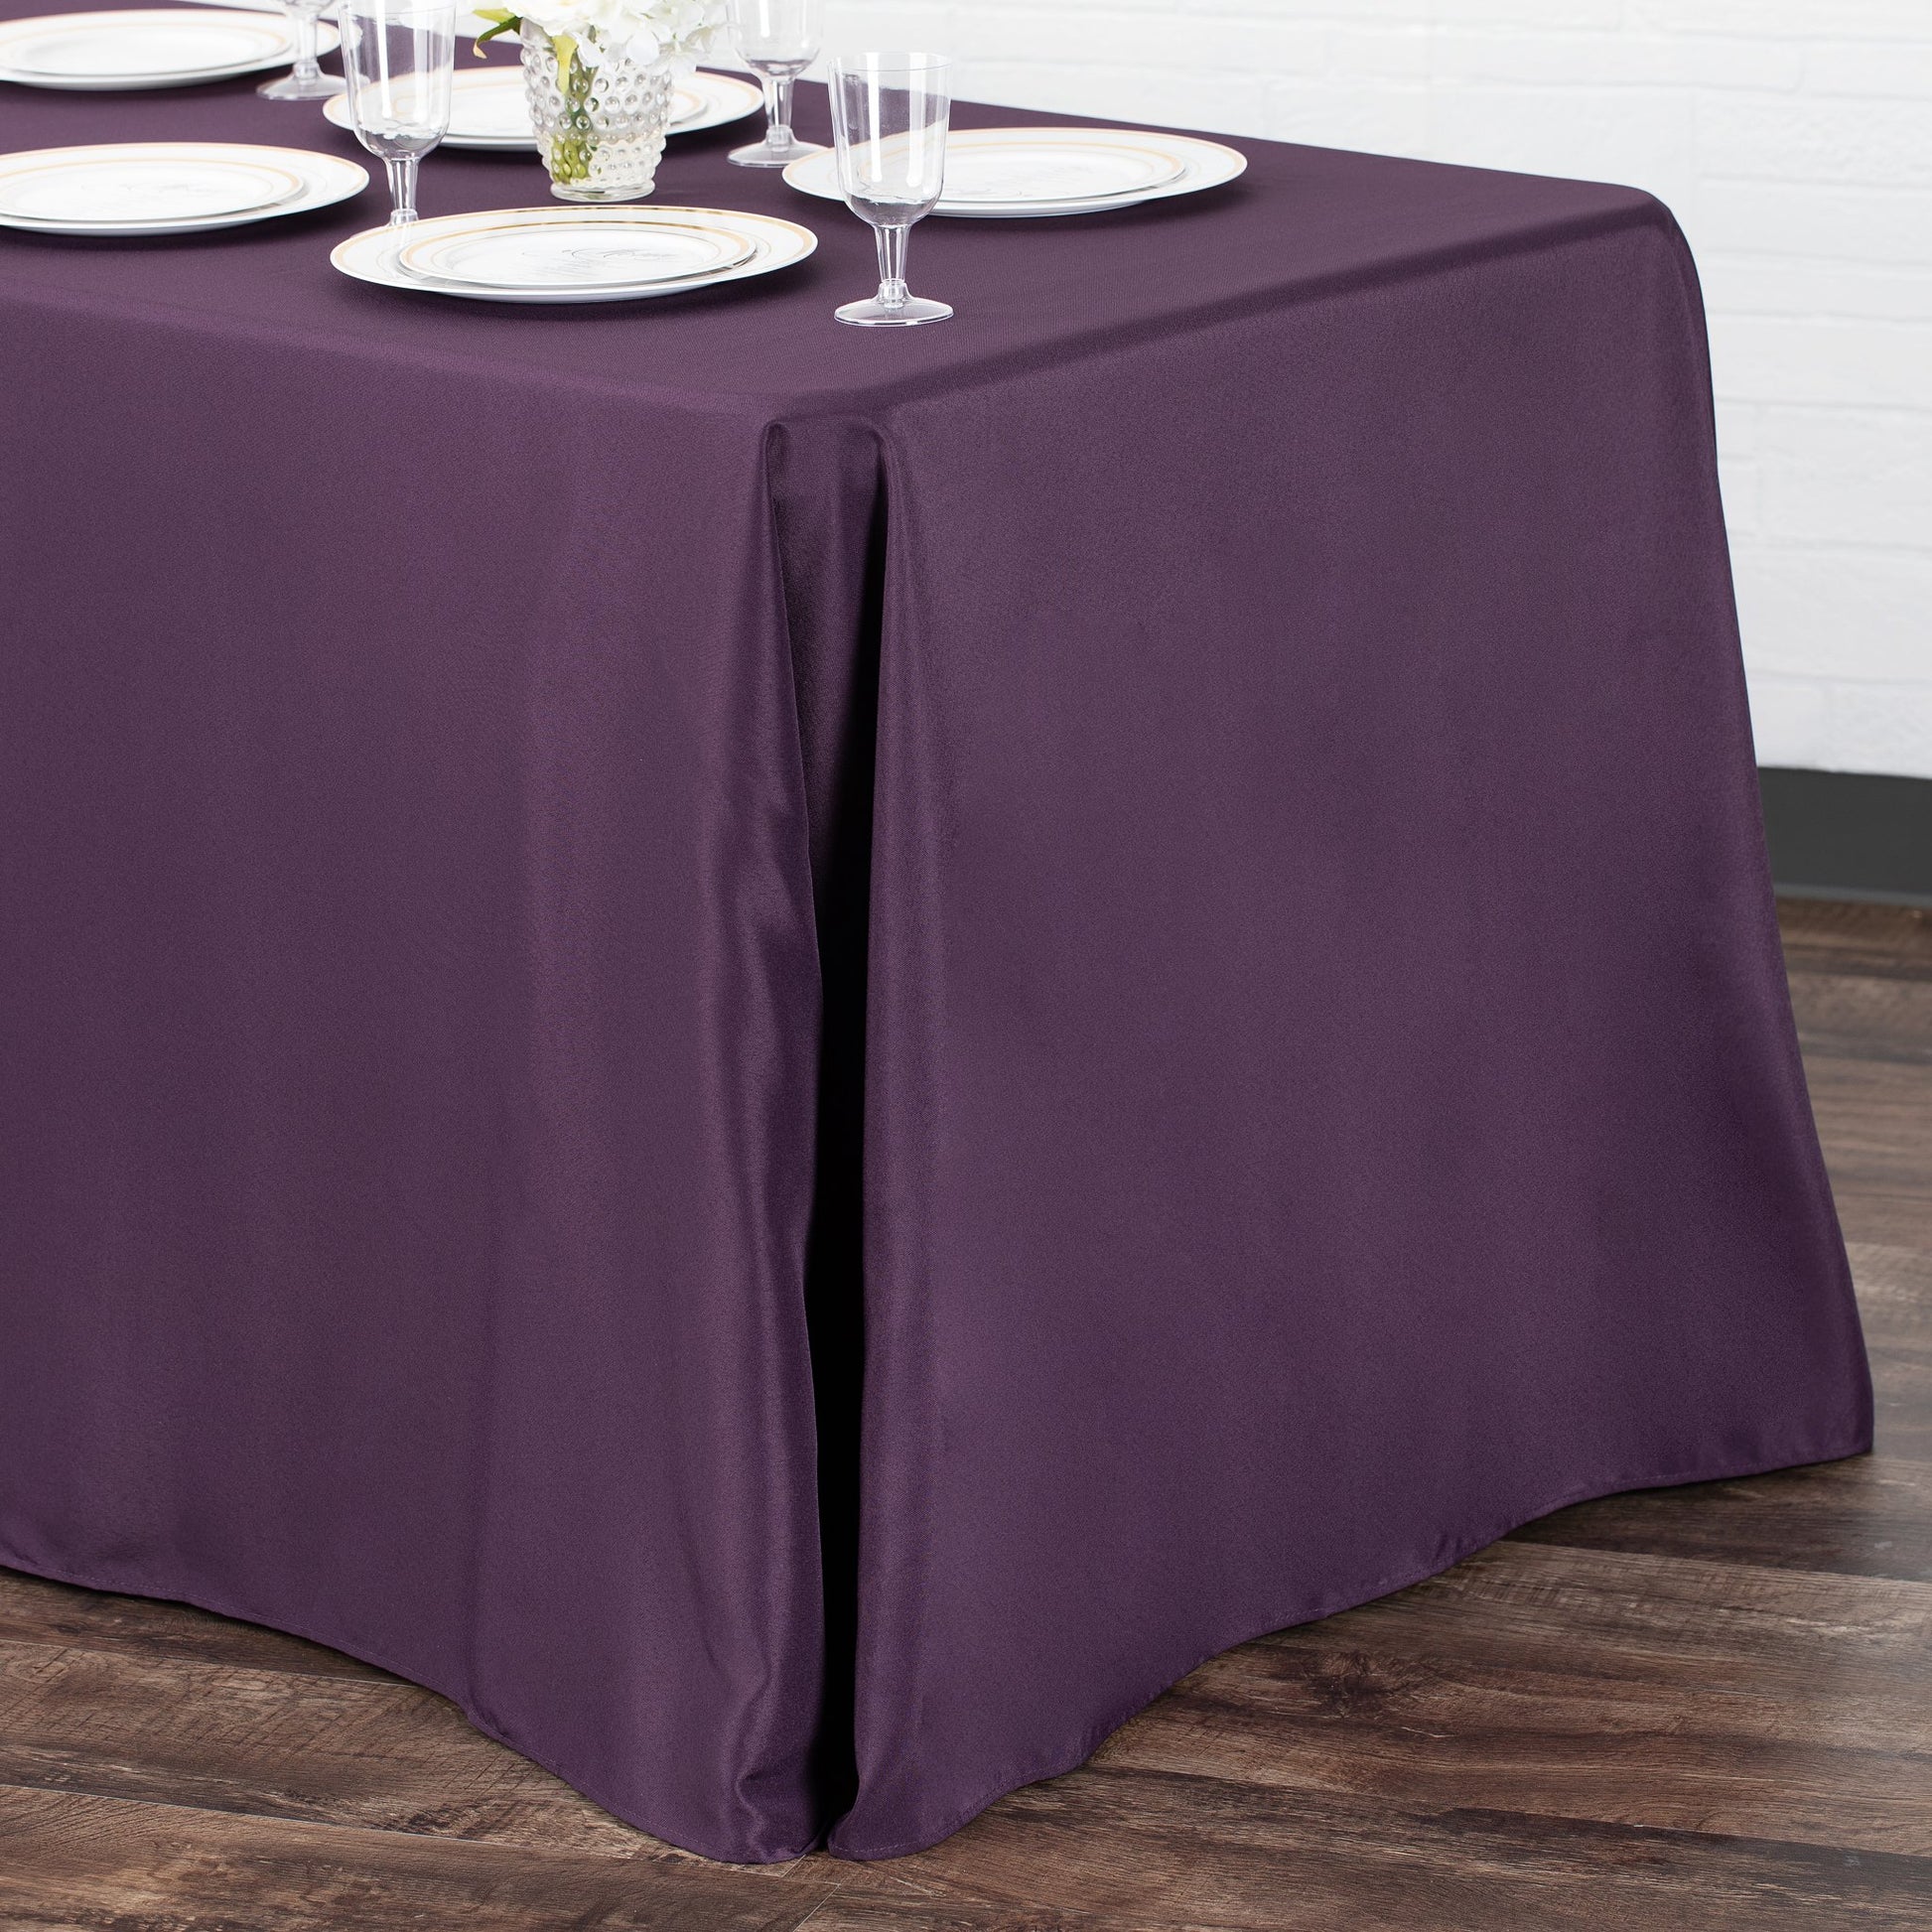 90"x132" Rectangular Oblong Polyester Tablecloth - Eggplant/Plum - CV Linens